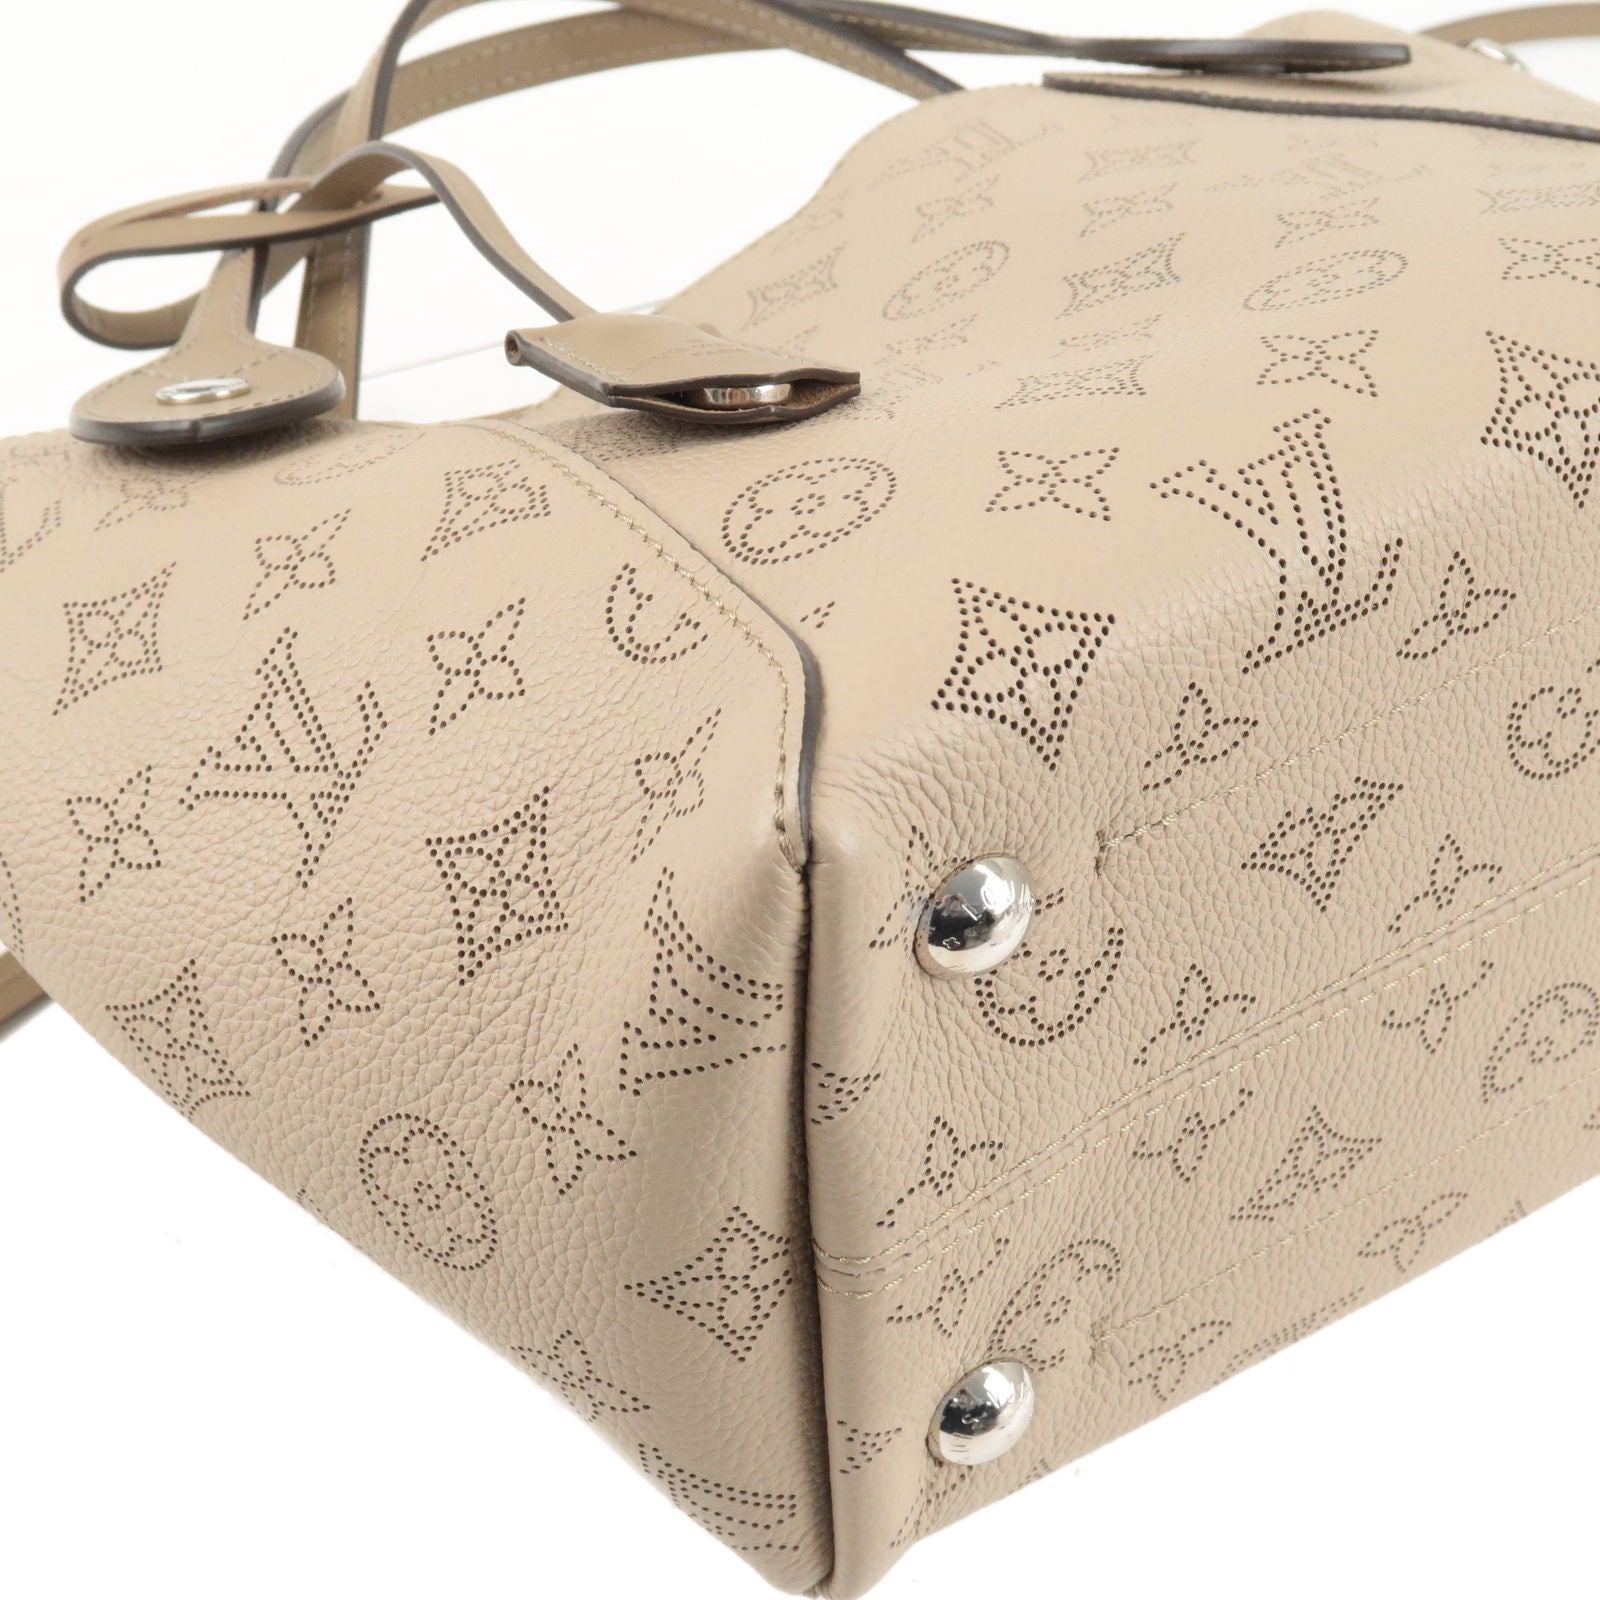 Handbag Reveal: Louis Vuitton Eva Clutch Monogram + How To Buy Pre Loved